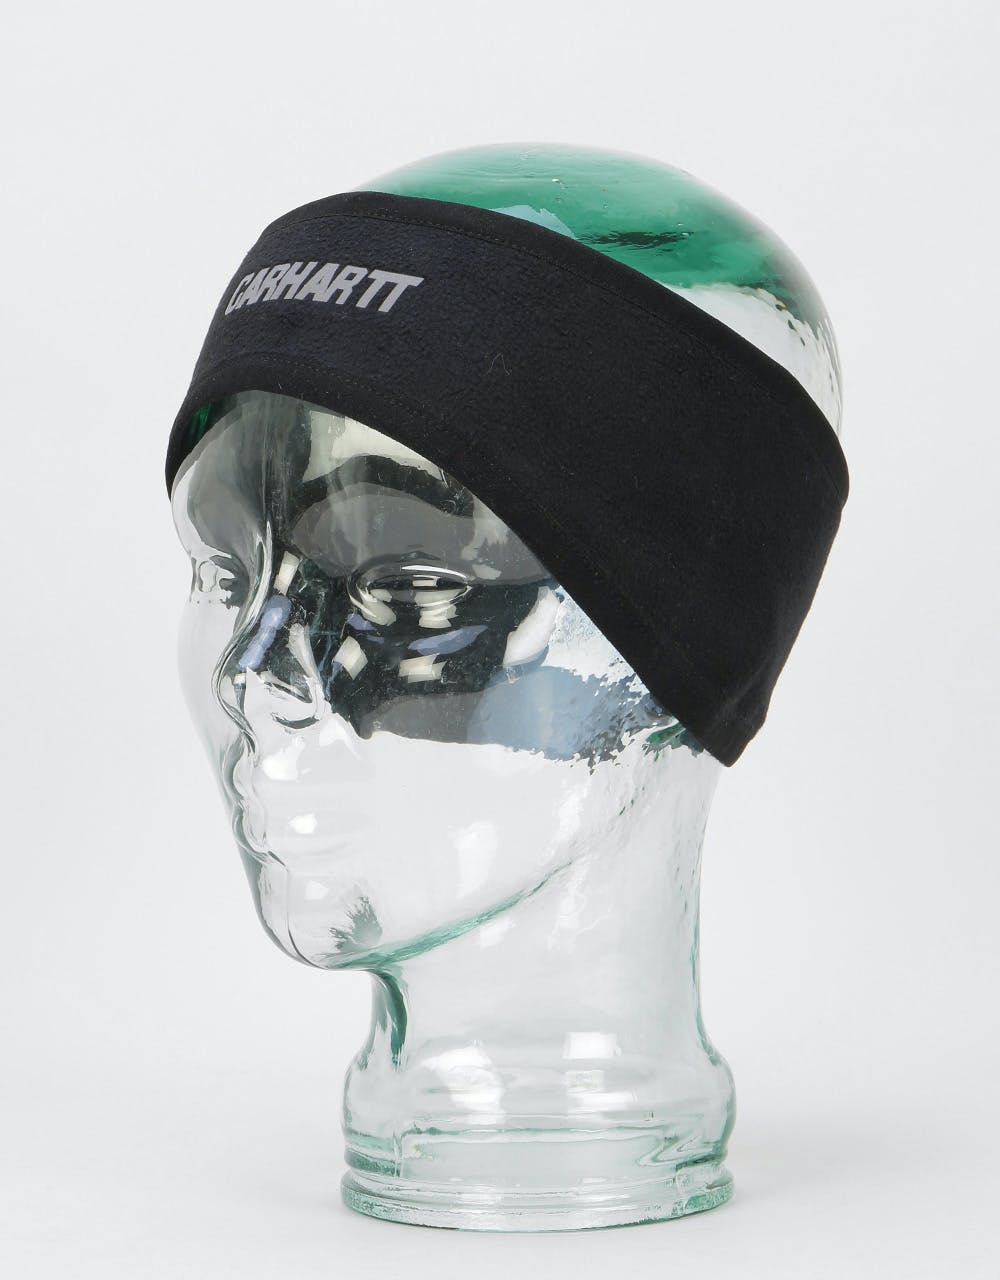 Carhartt WIP Beaufort Headband - Black/Reflective